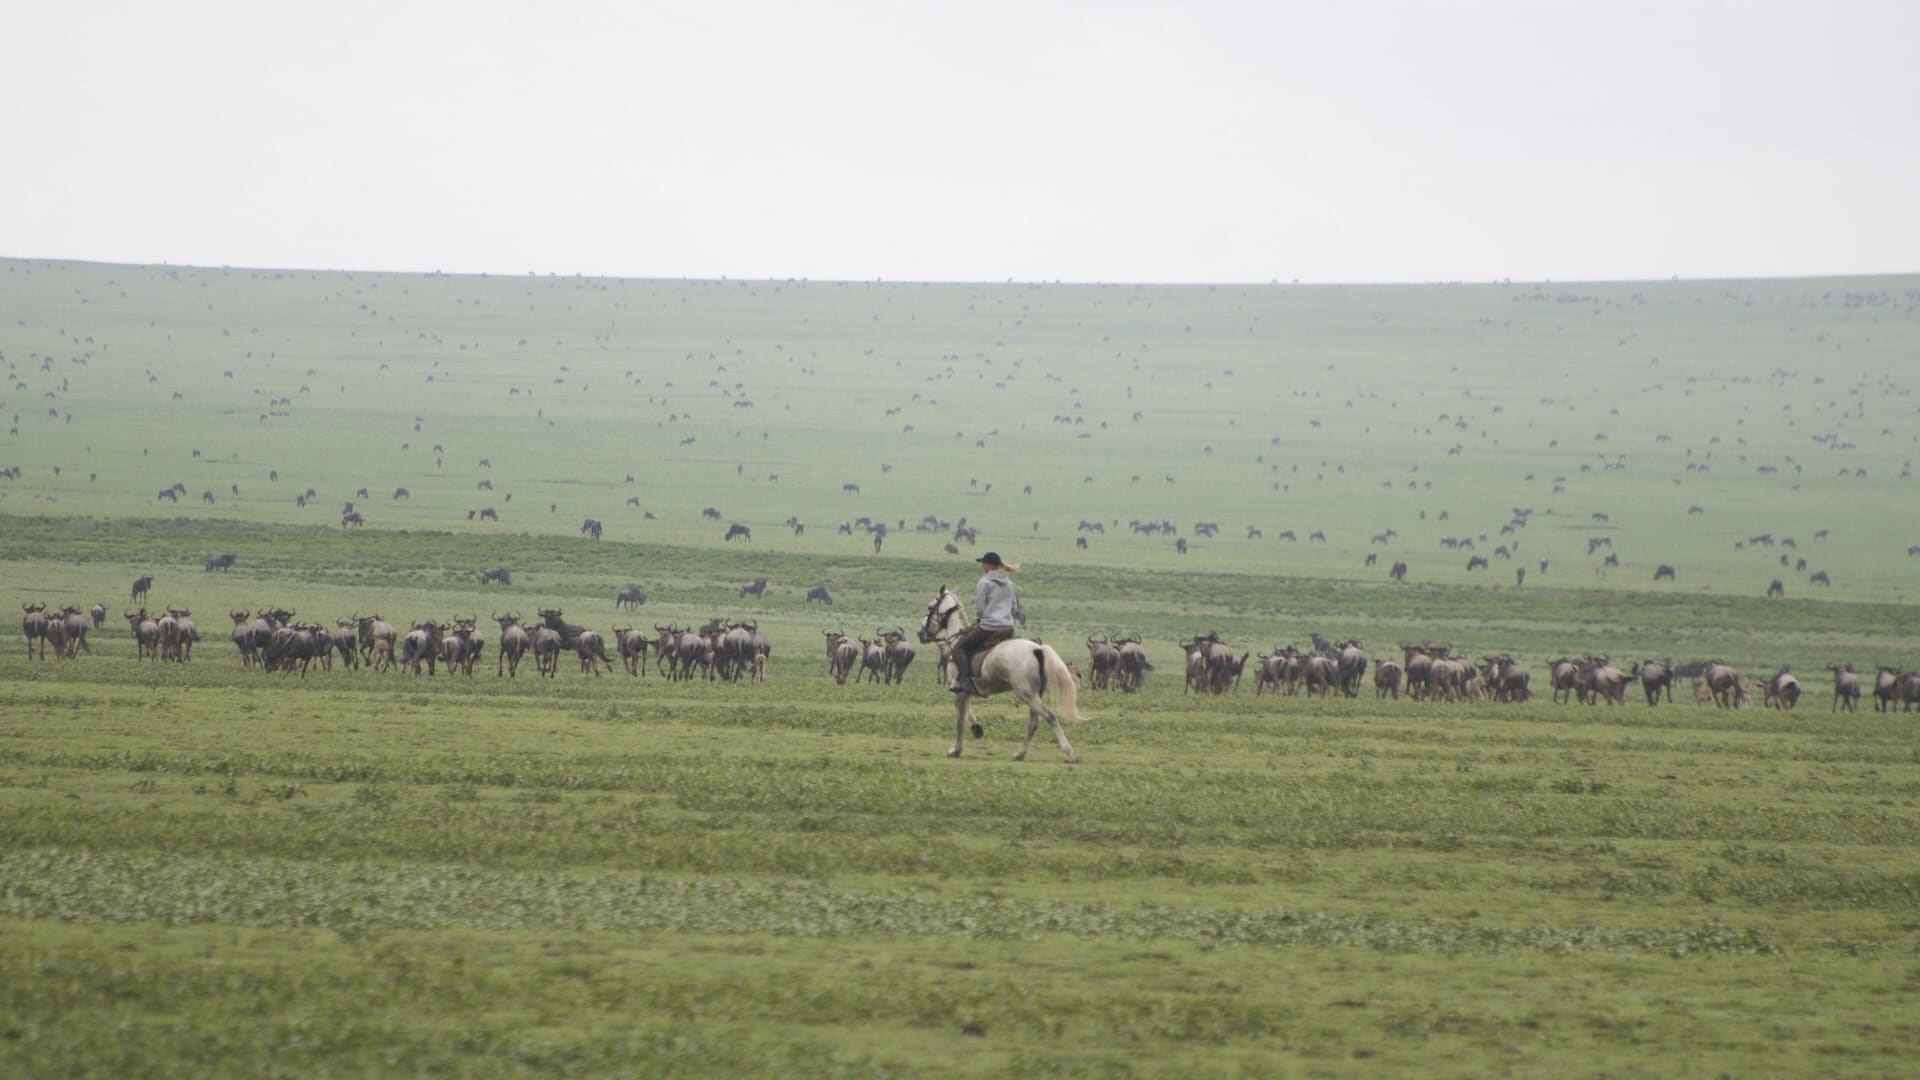 A lone rider approaching wildebeest herd